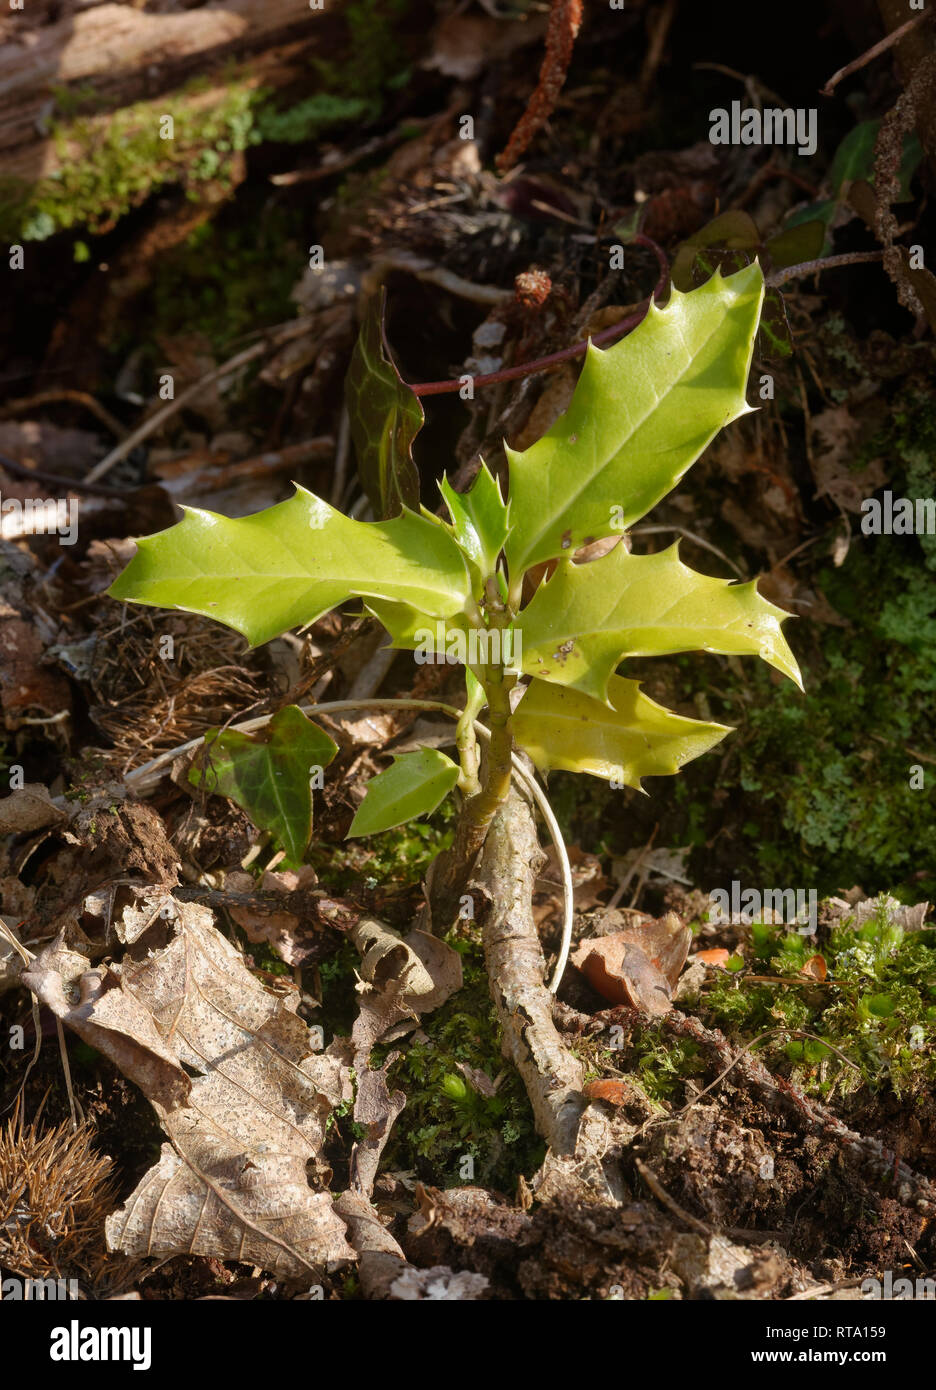 Común o europea de acebo - Ilex aquifolium nueva plántula Foto de stock